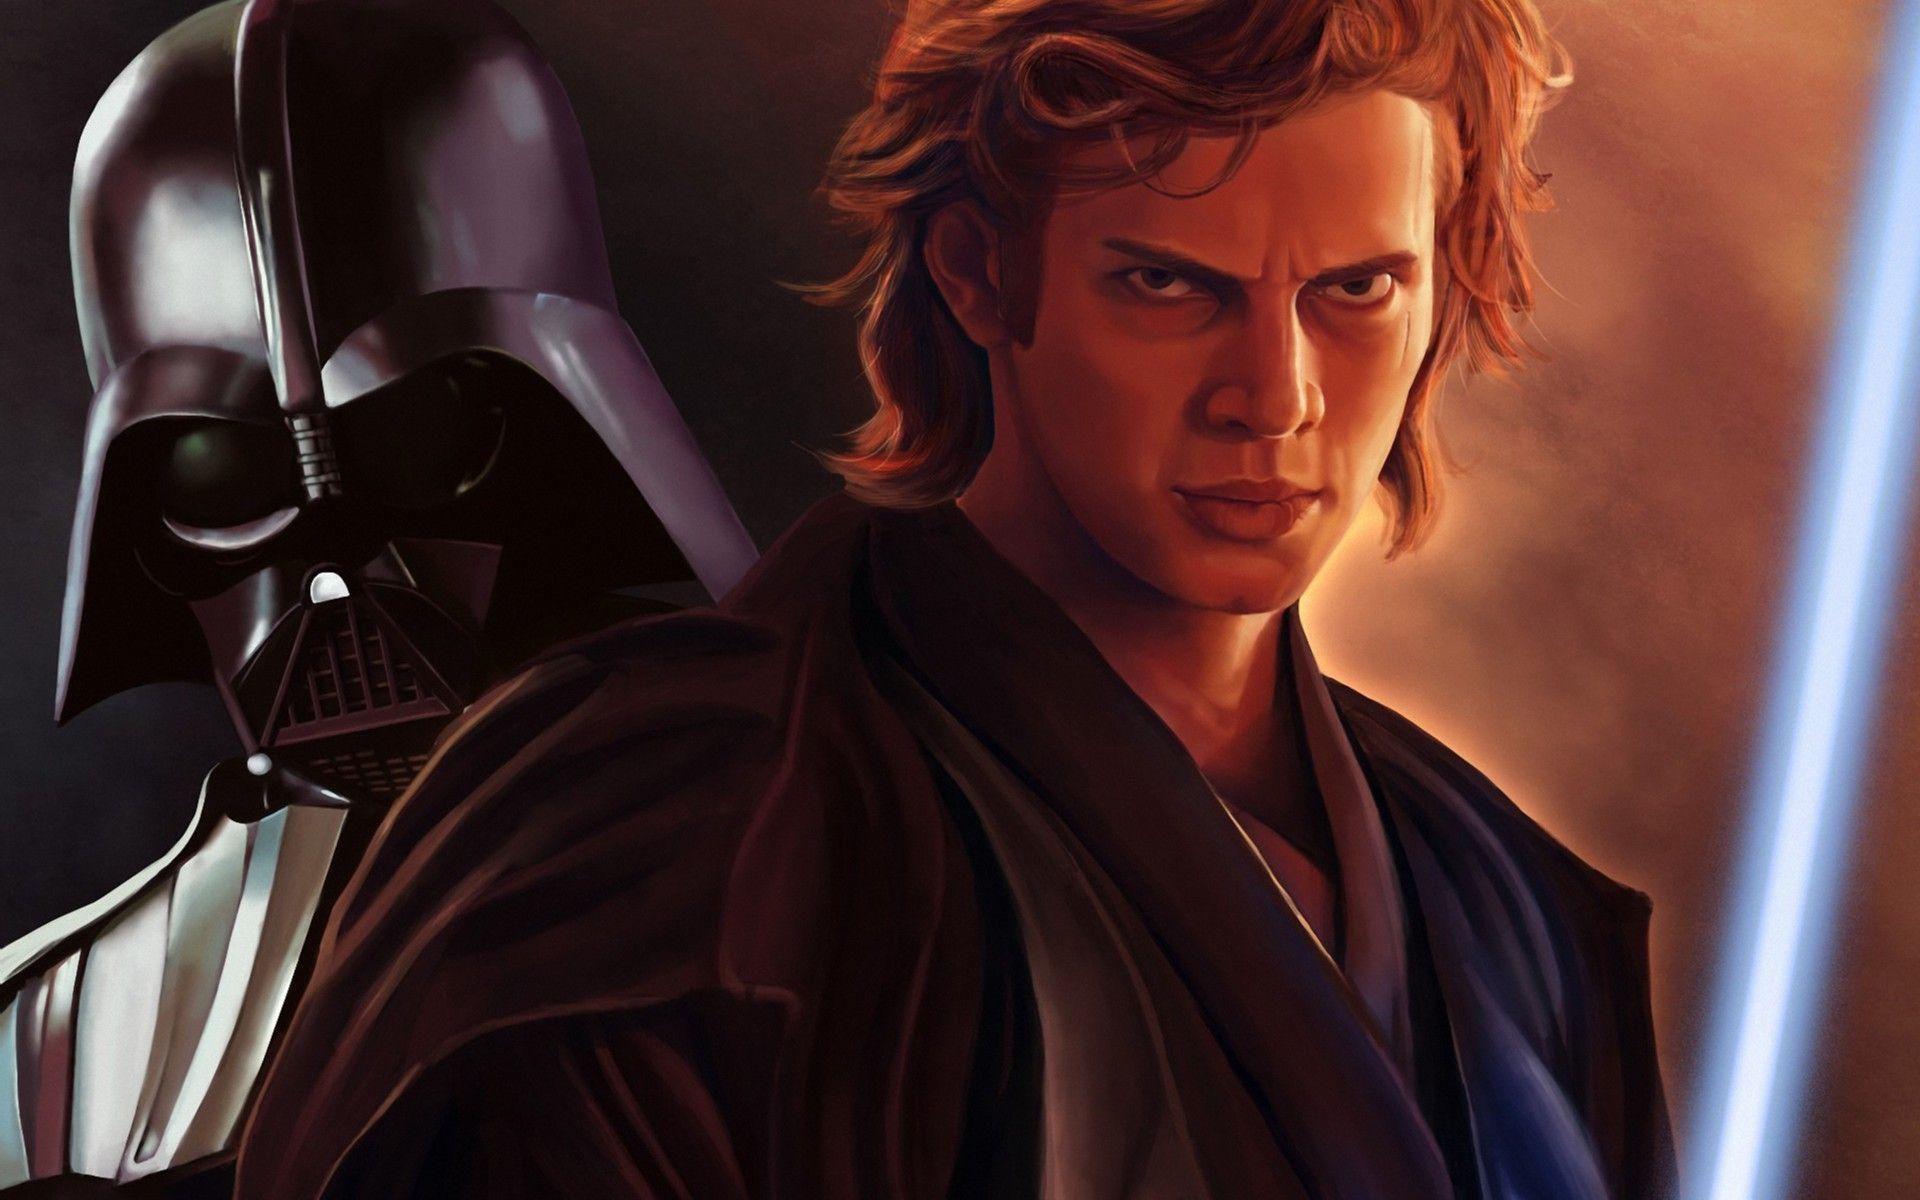 Skywalker and Darth Vader wallpaper. movies and tv series